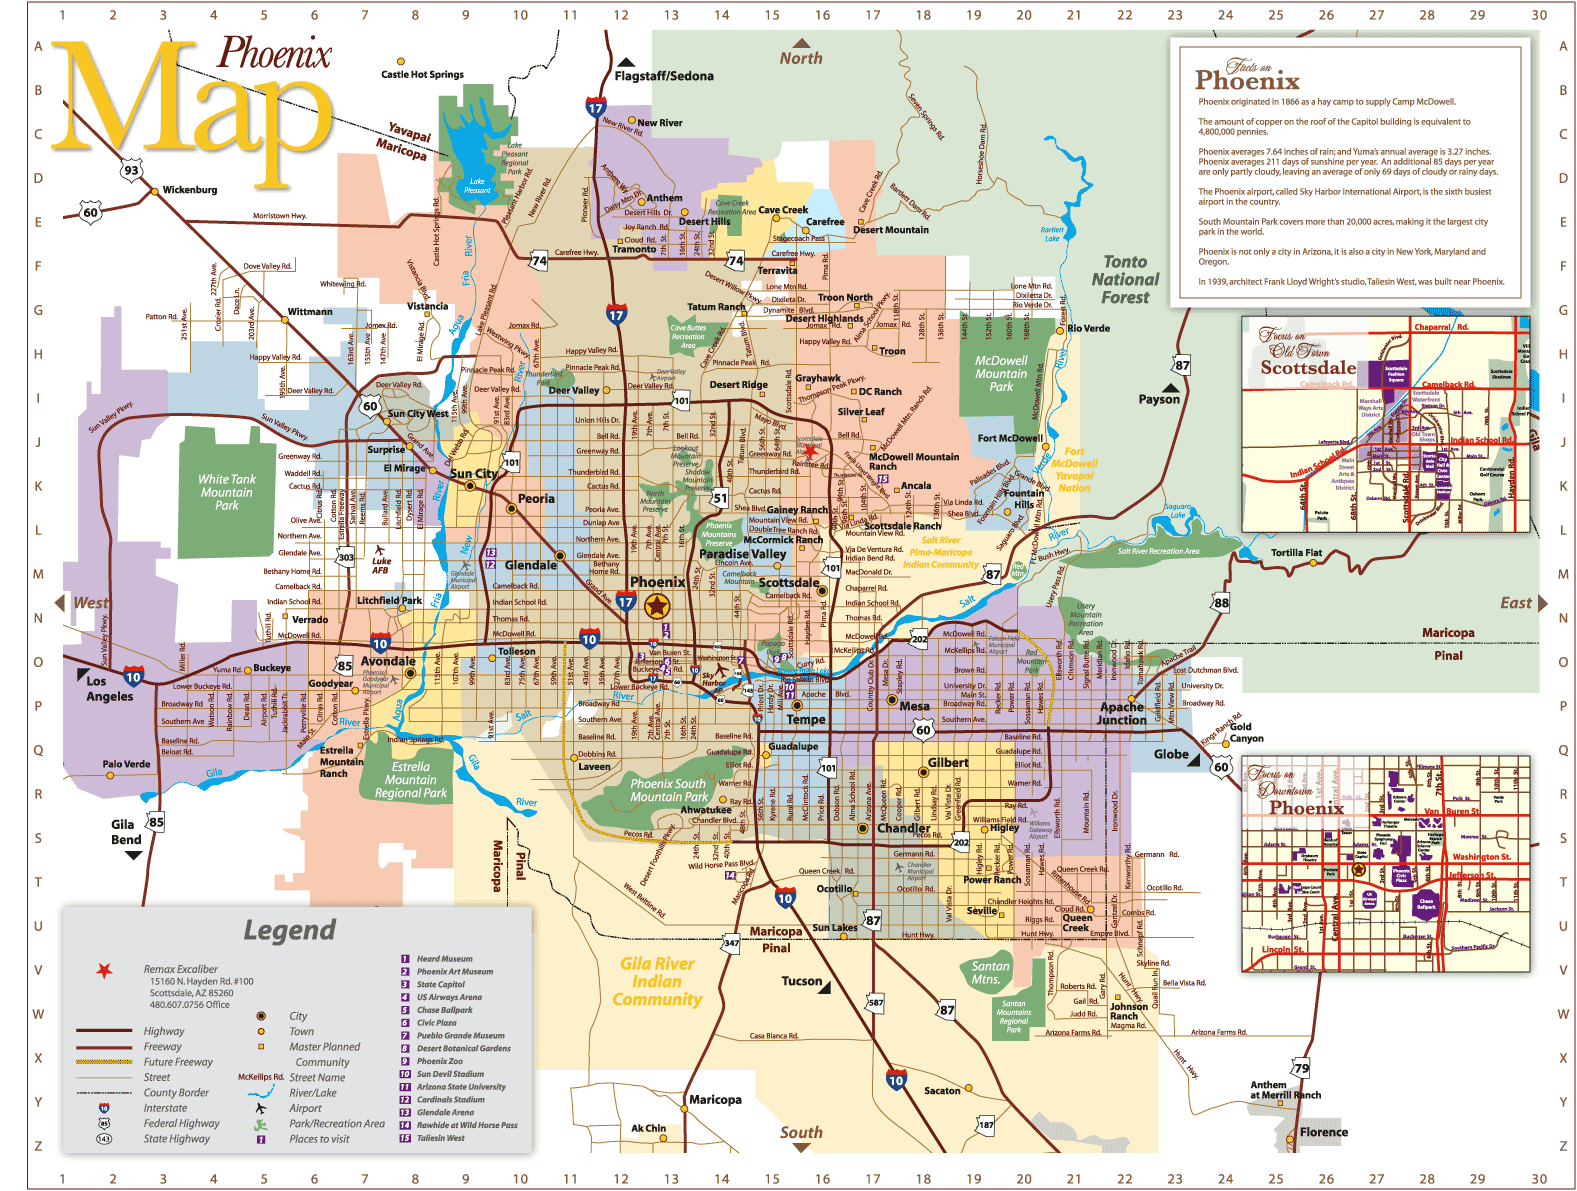 phoenixmesa metro map  0 Phoenix Mesa Metro Map